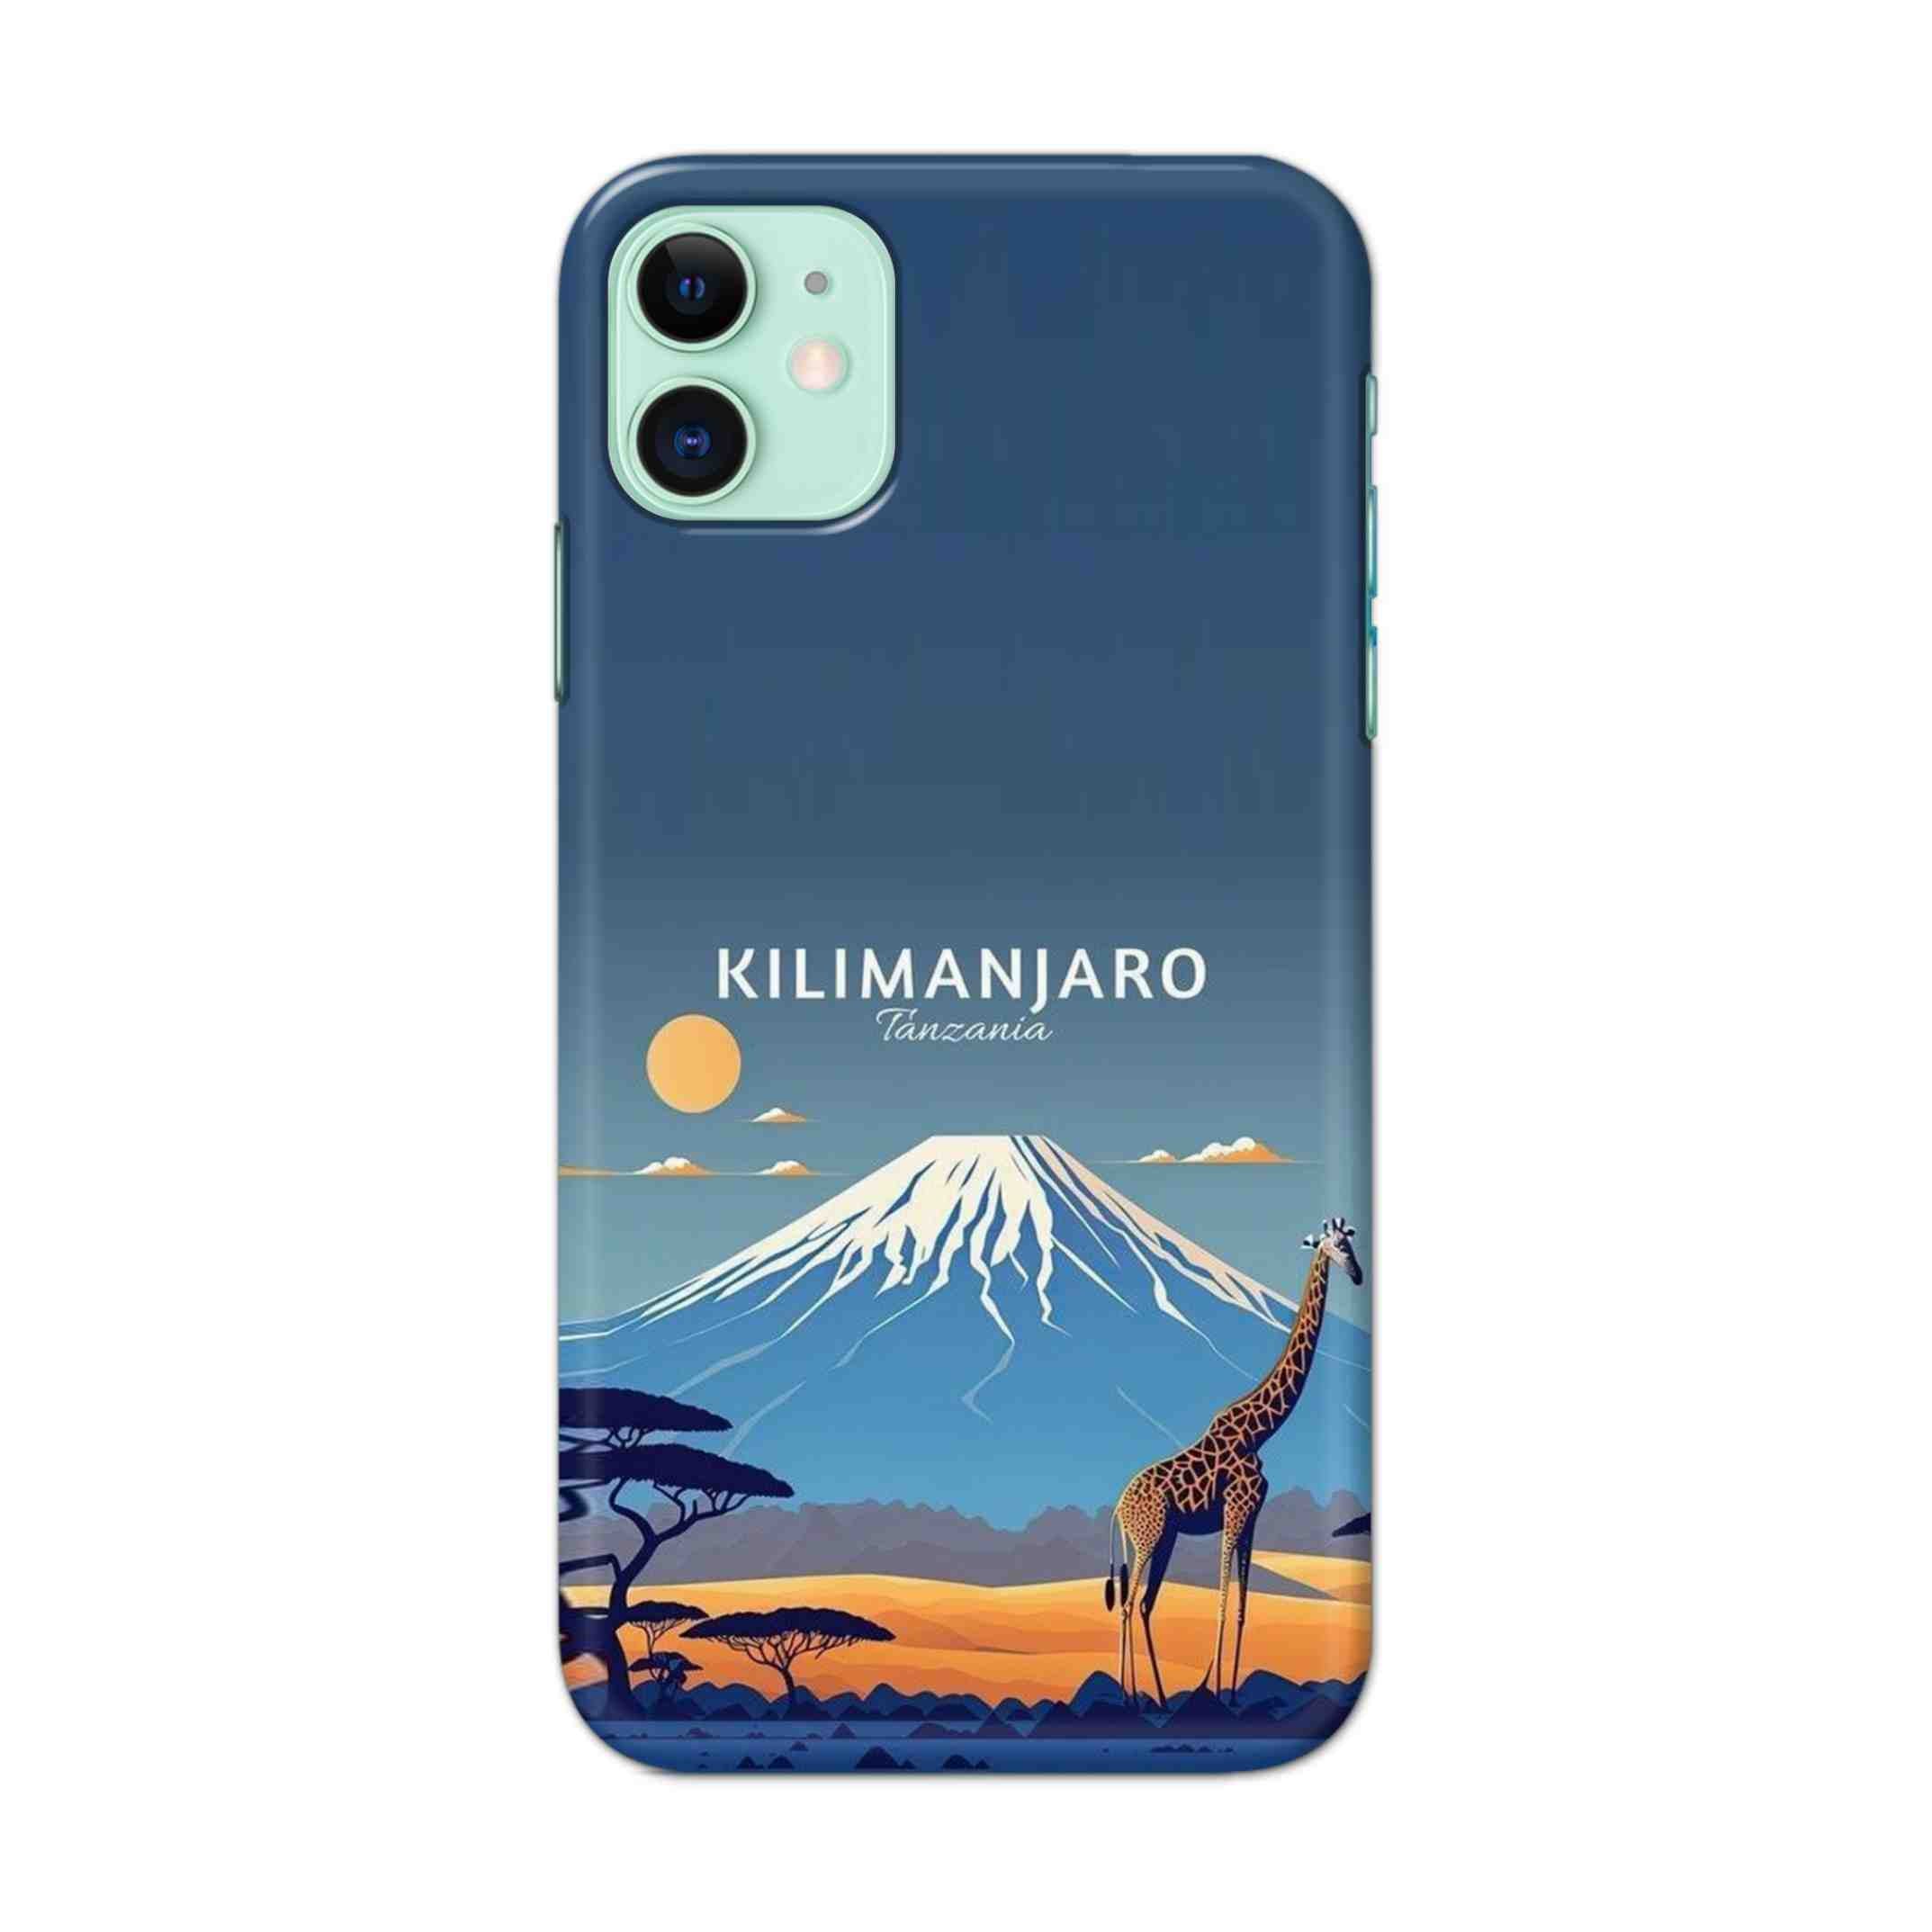 Buy Kilimanjaro Hard Back Mobile Phone Case/Cover For iPhone 11 Online